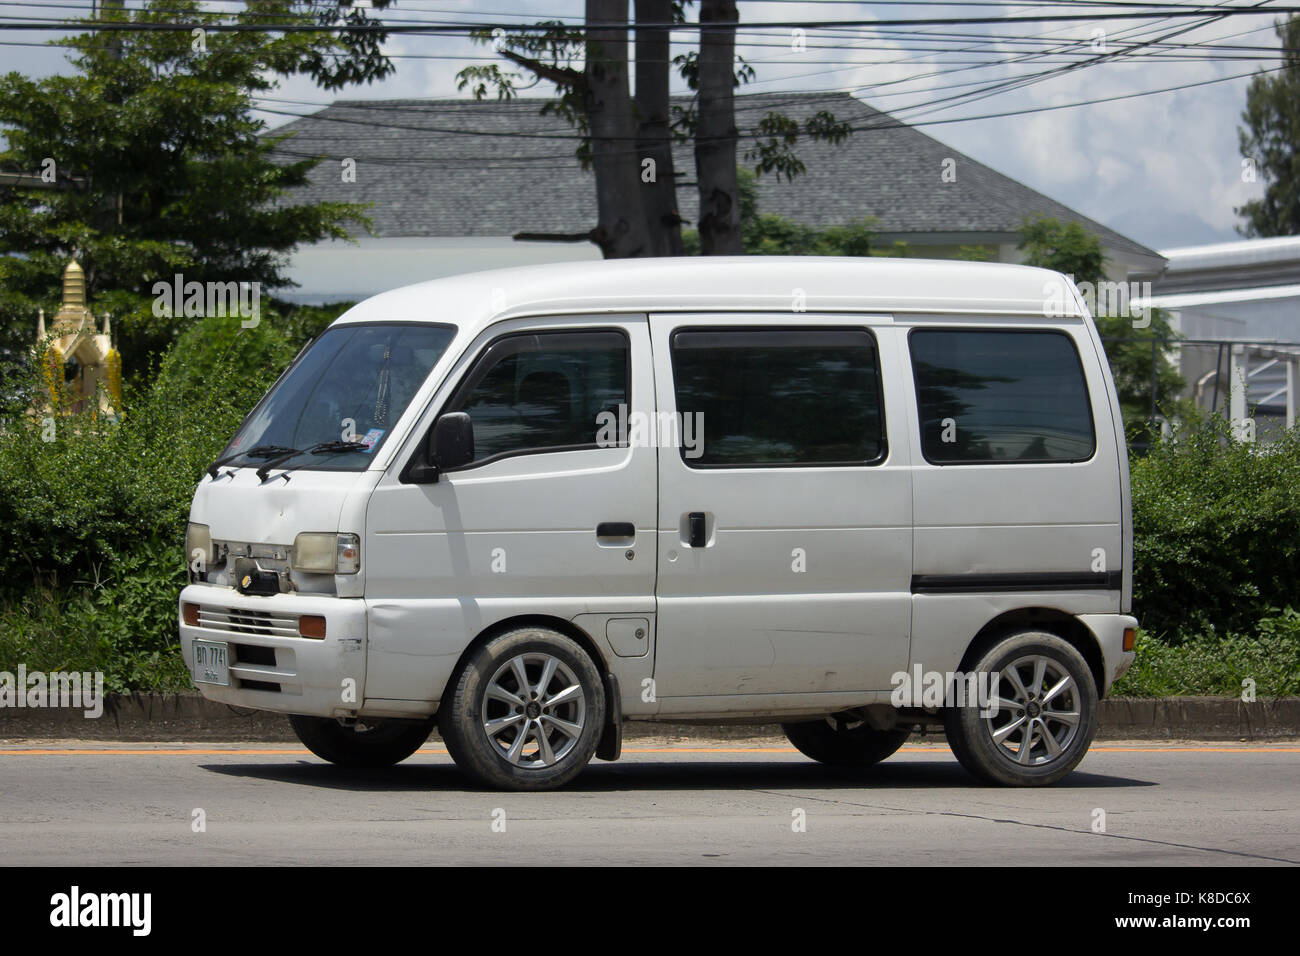 Suzuki mini van hi-res stock photography and images - Alamy